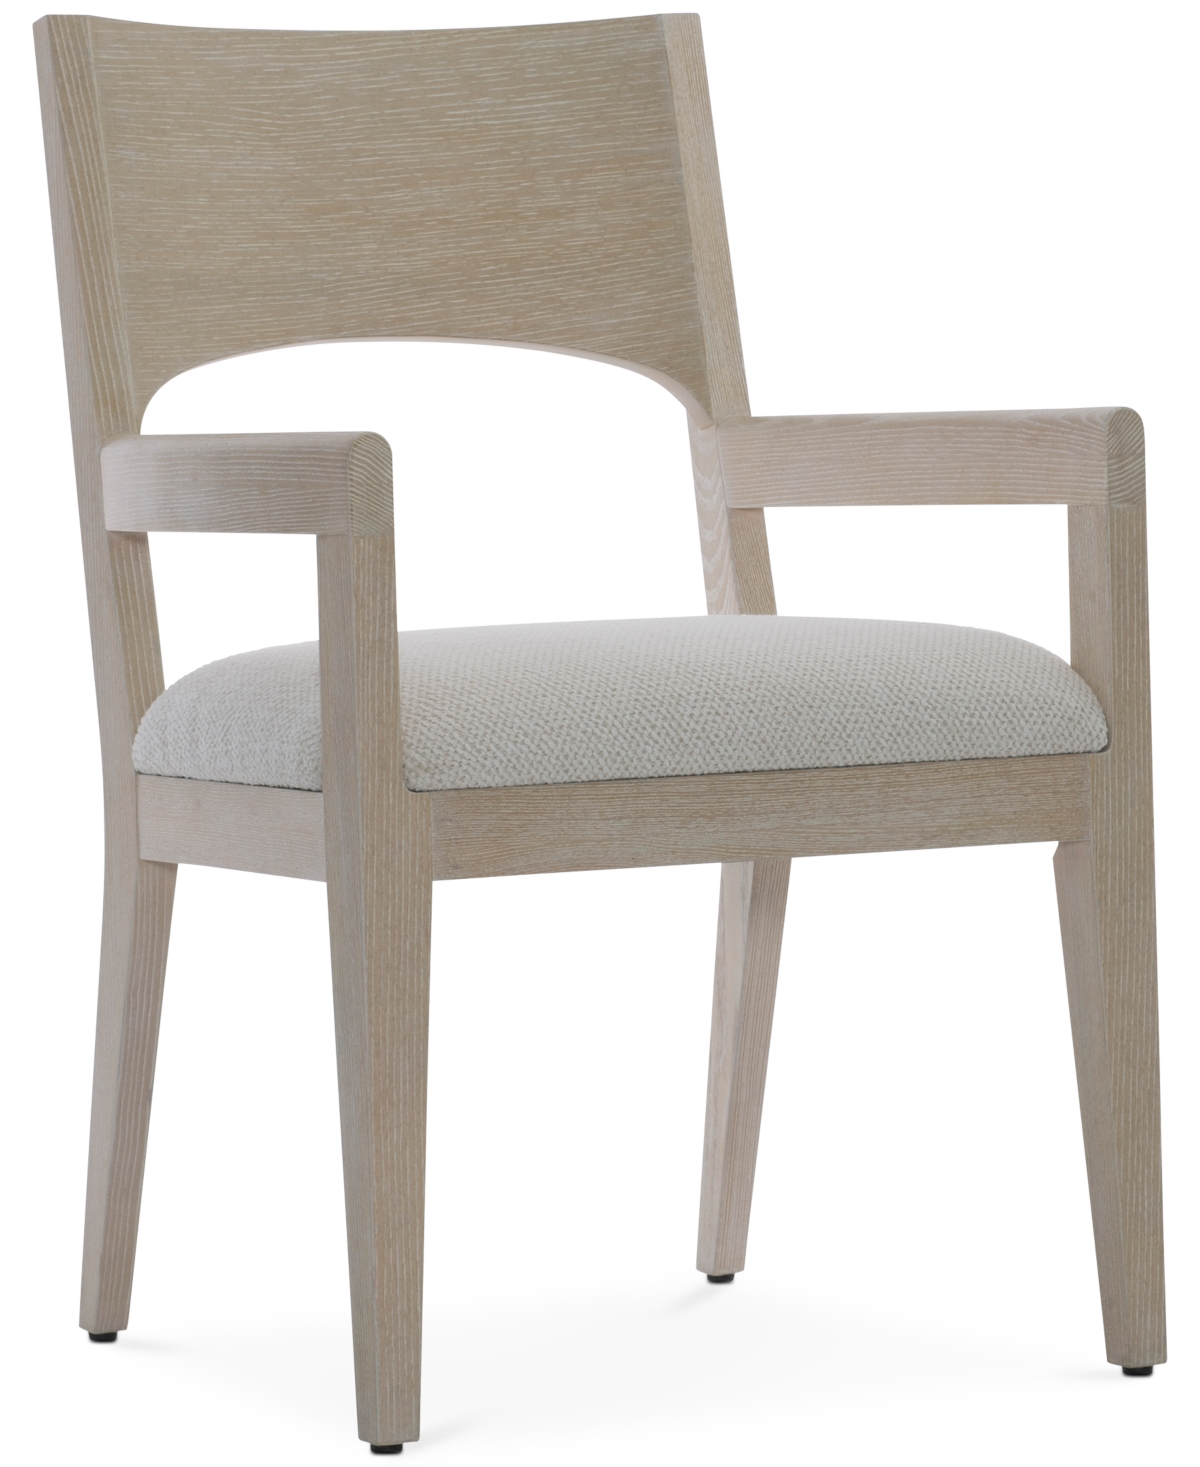 Bernhardt Solaria Arm Chair In Light Wood/white